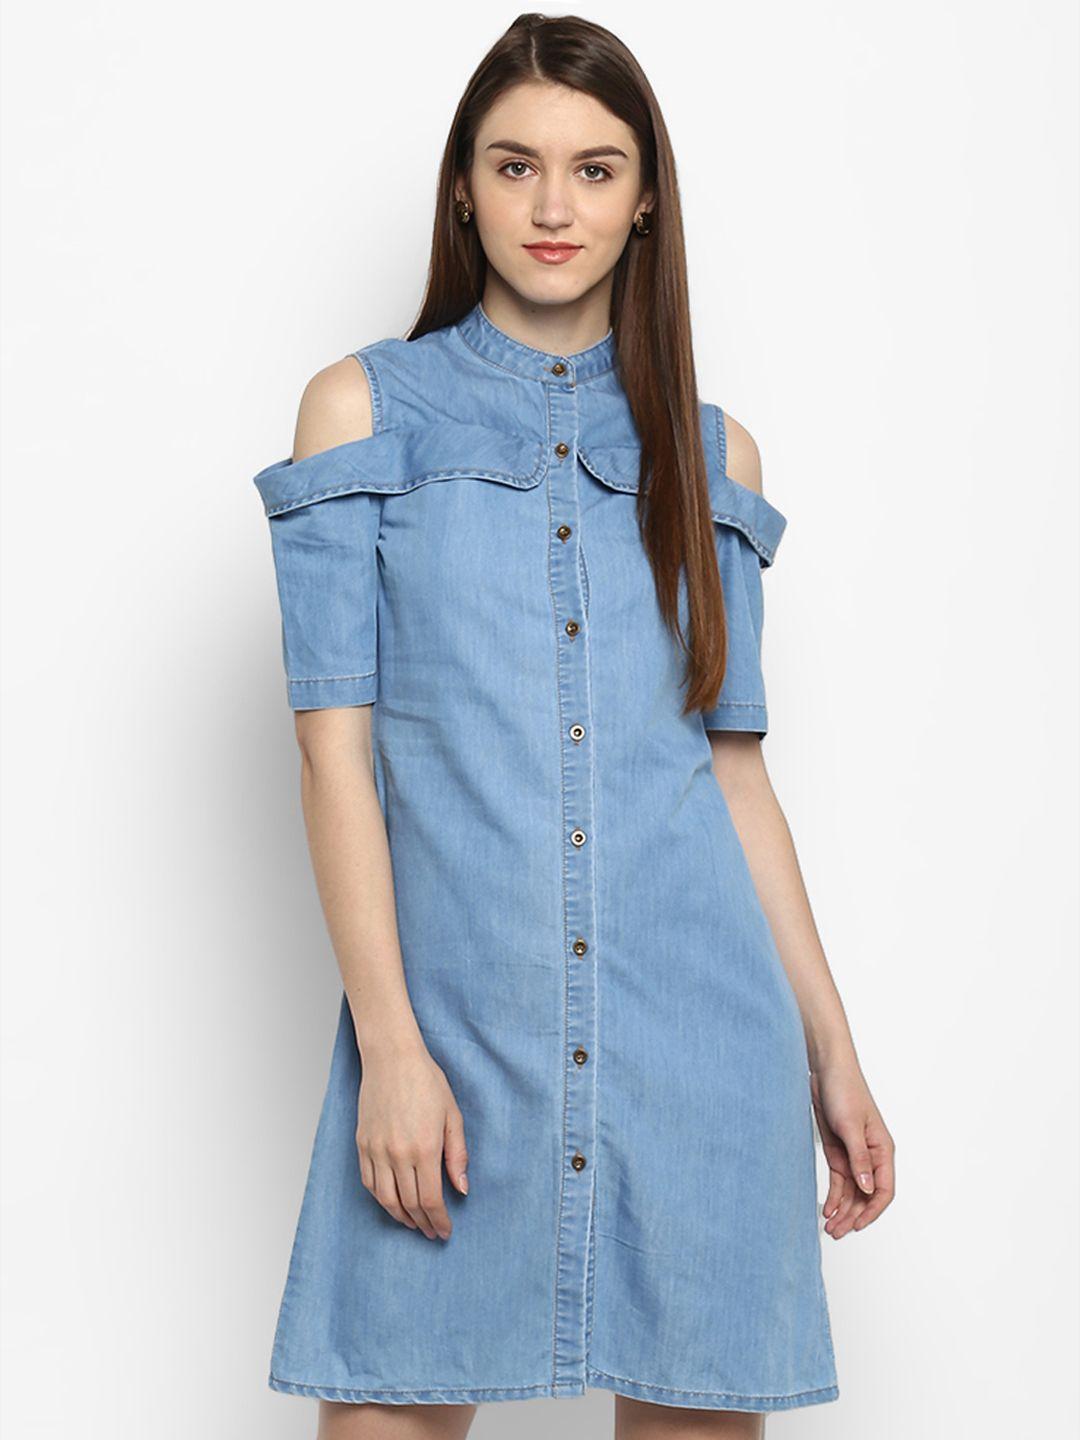 stylestone-women-blue-solid-denim-shirt-dress